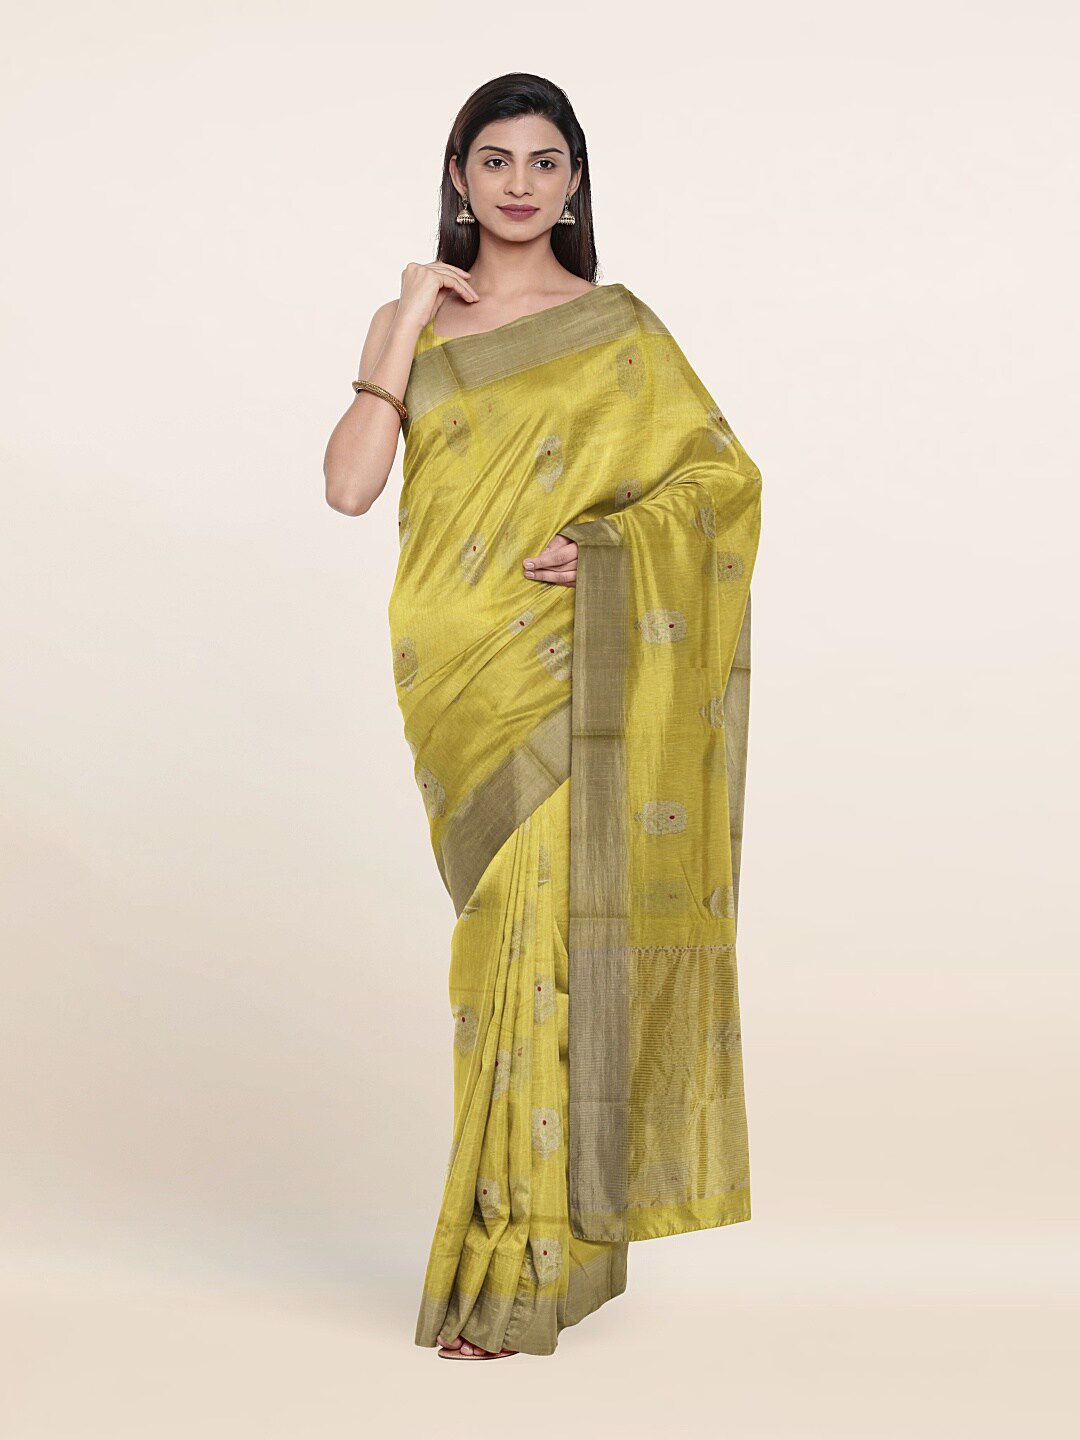 Pothys Yellow & Gold-Toned Ethnic Motifs Zari Silk Cotton Saree Price in India